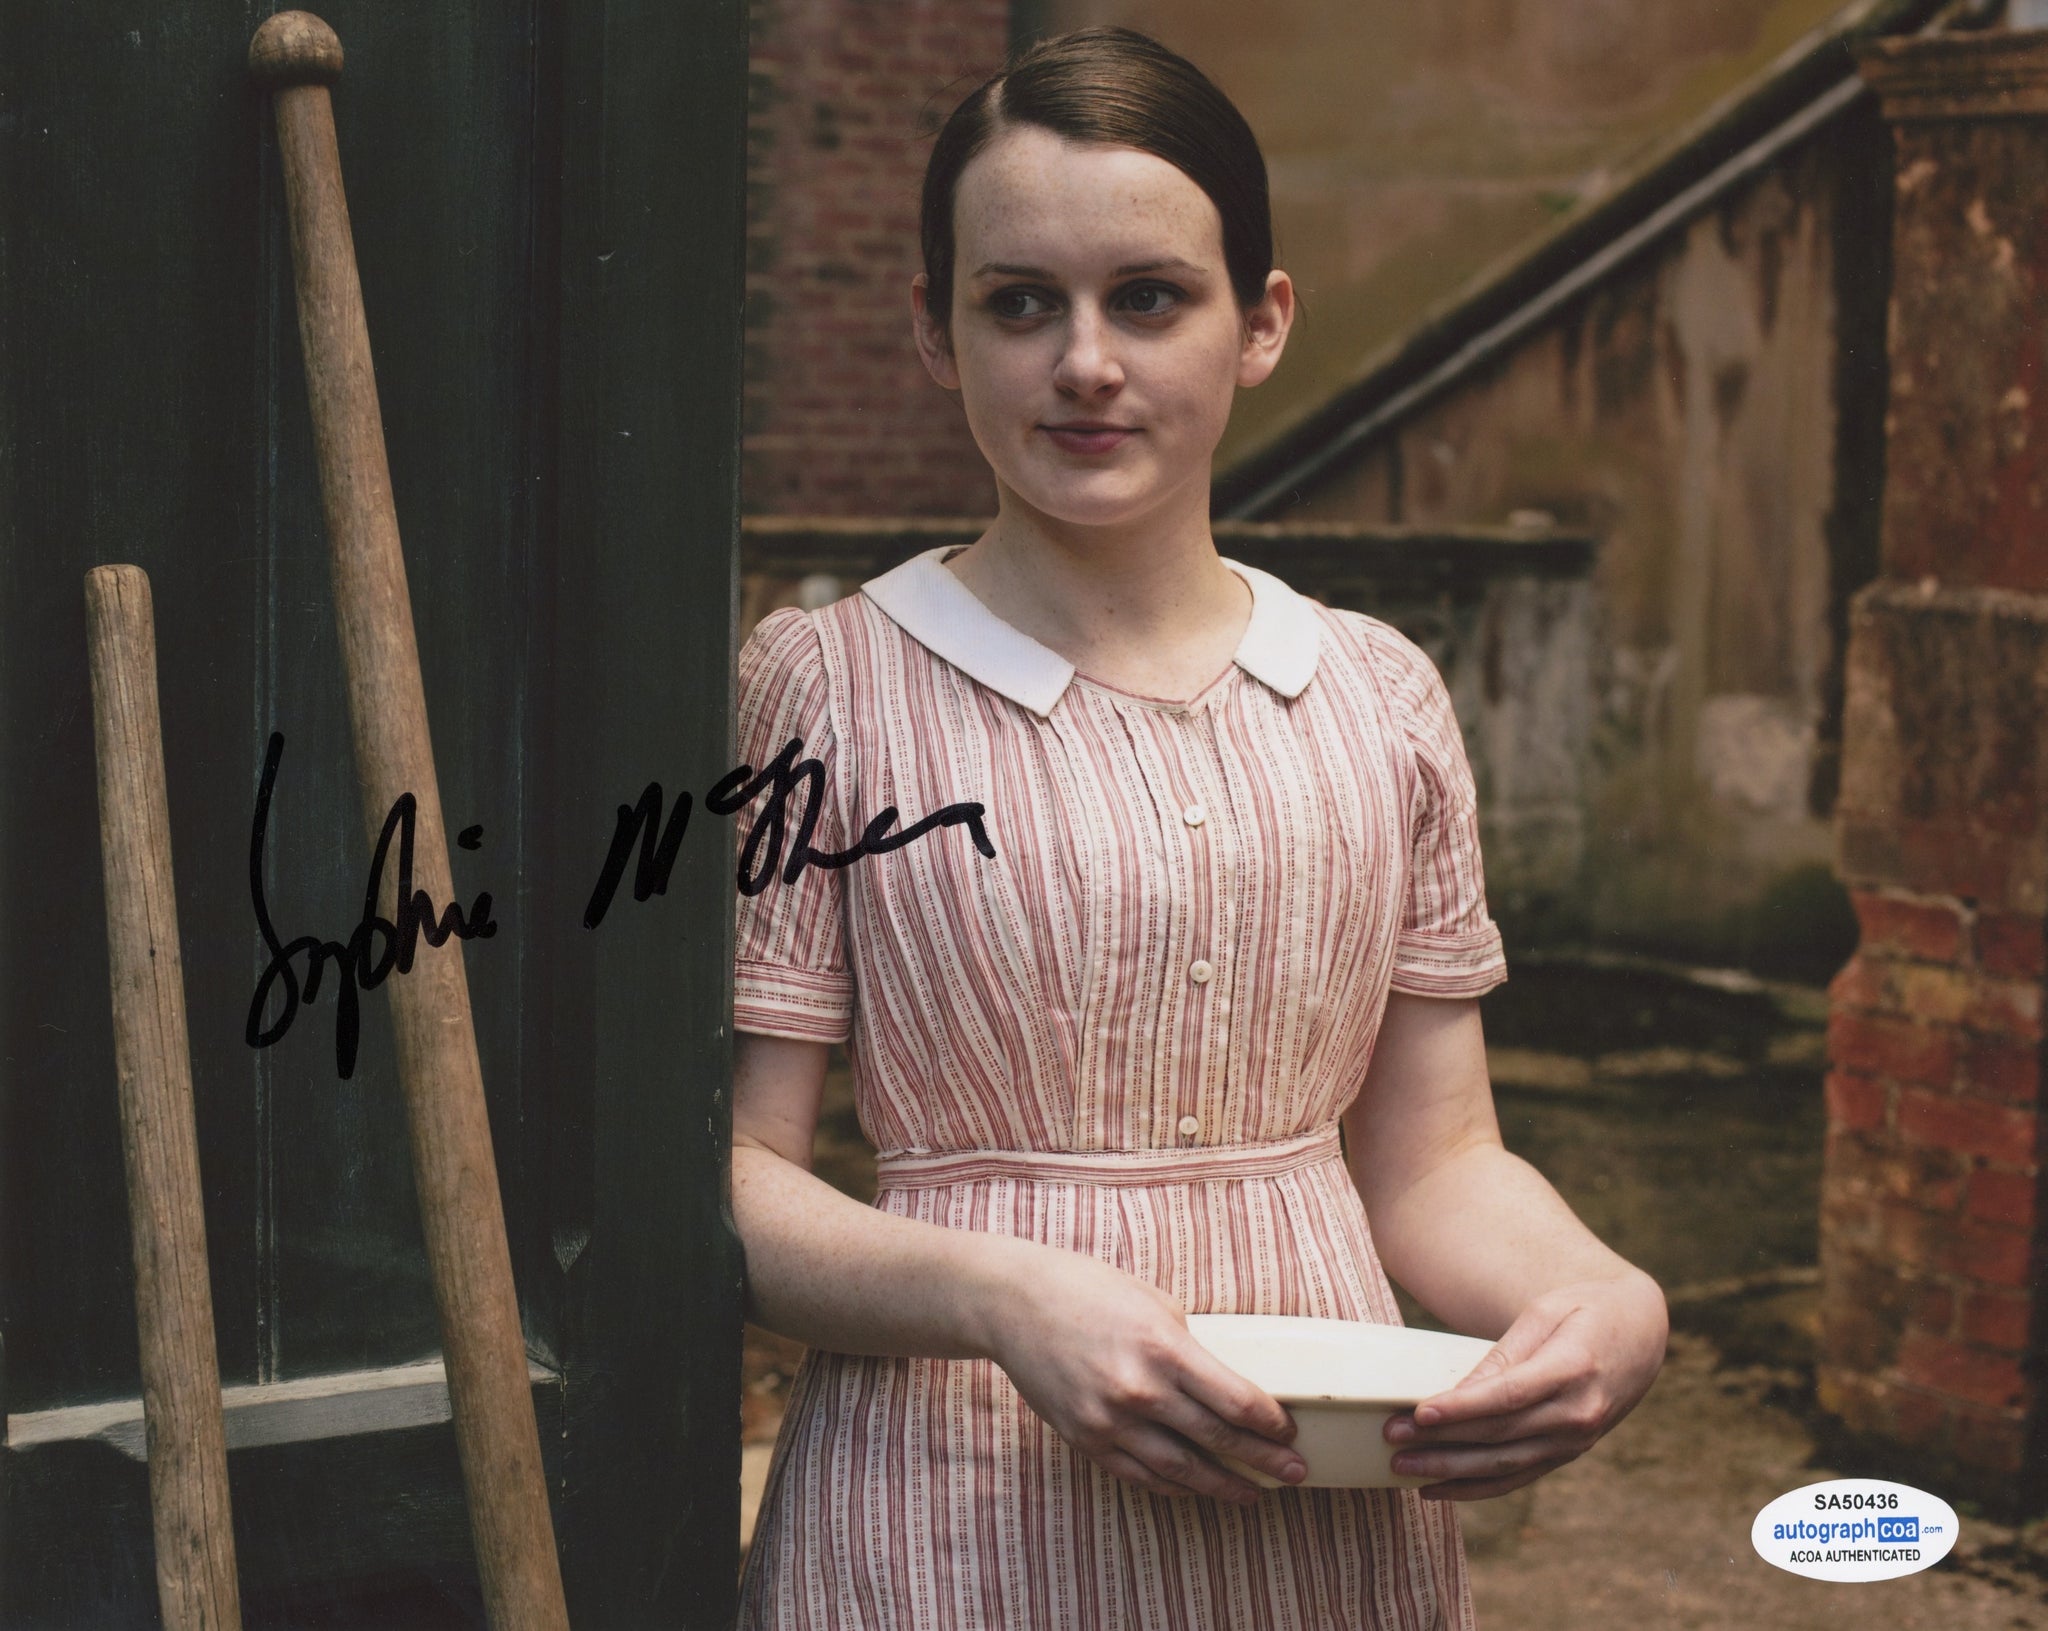 Sophie McShera Downton Abbey SIgned Autograph 8x10 Photo ACOA